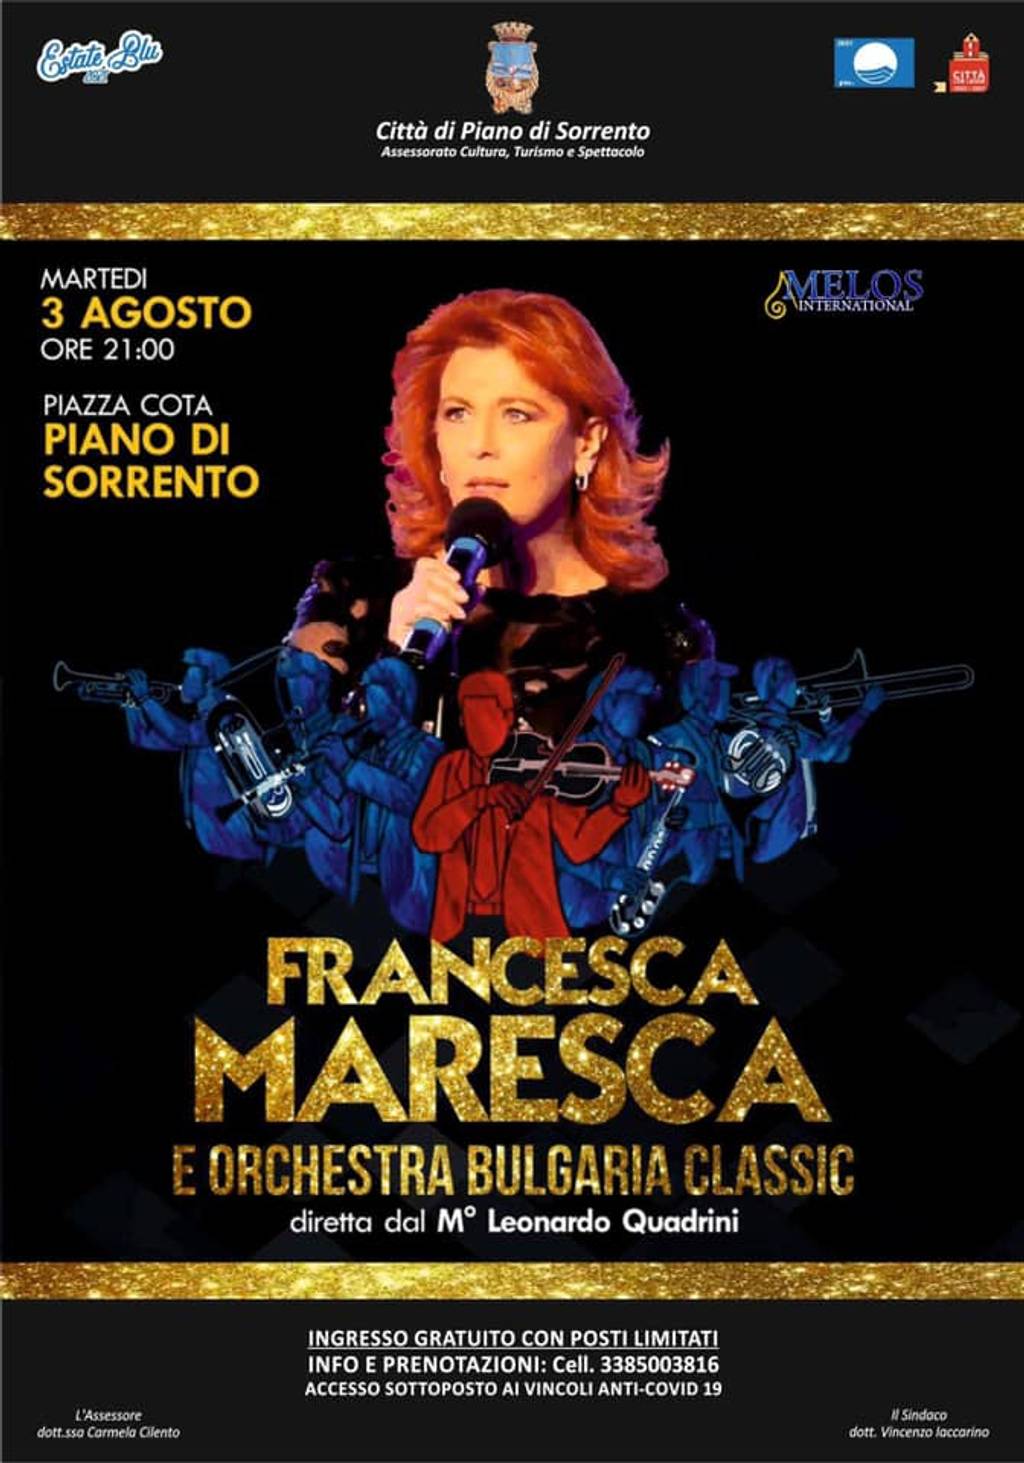 FRANCESCA MARESCA & Orchestra Bulgaria Classic